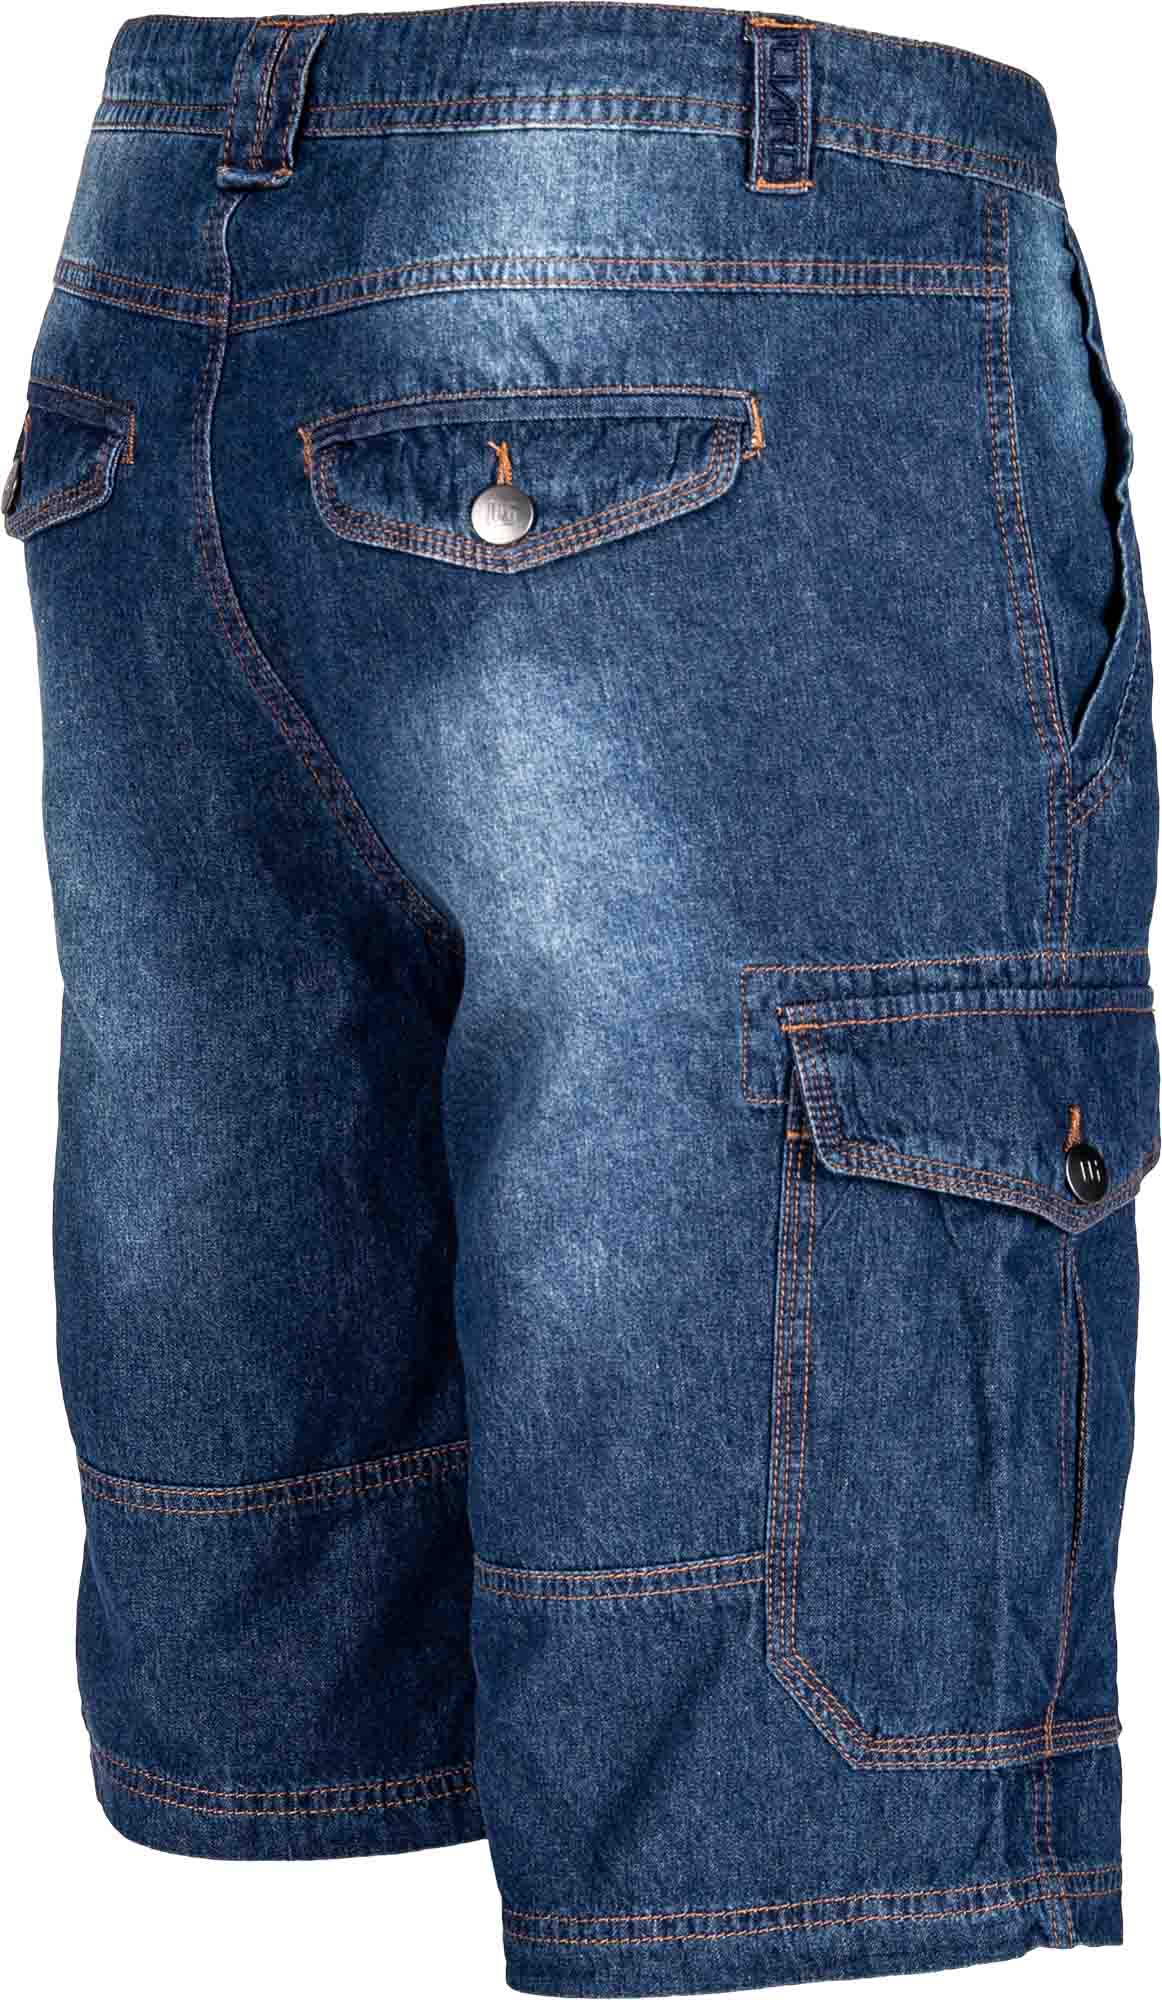 Men’s denim shorts